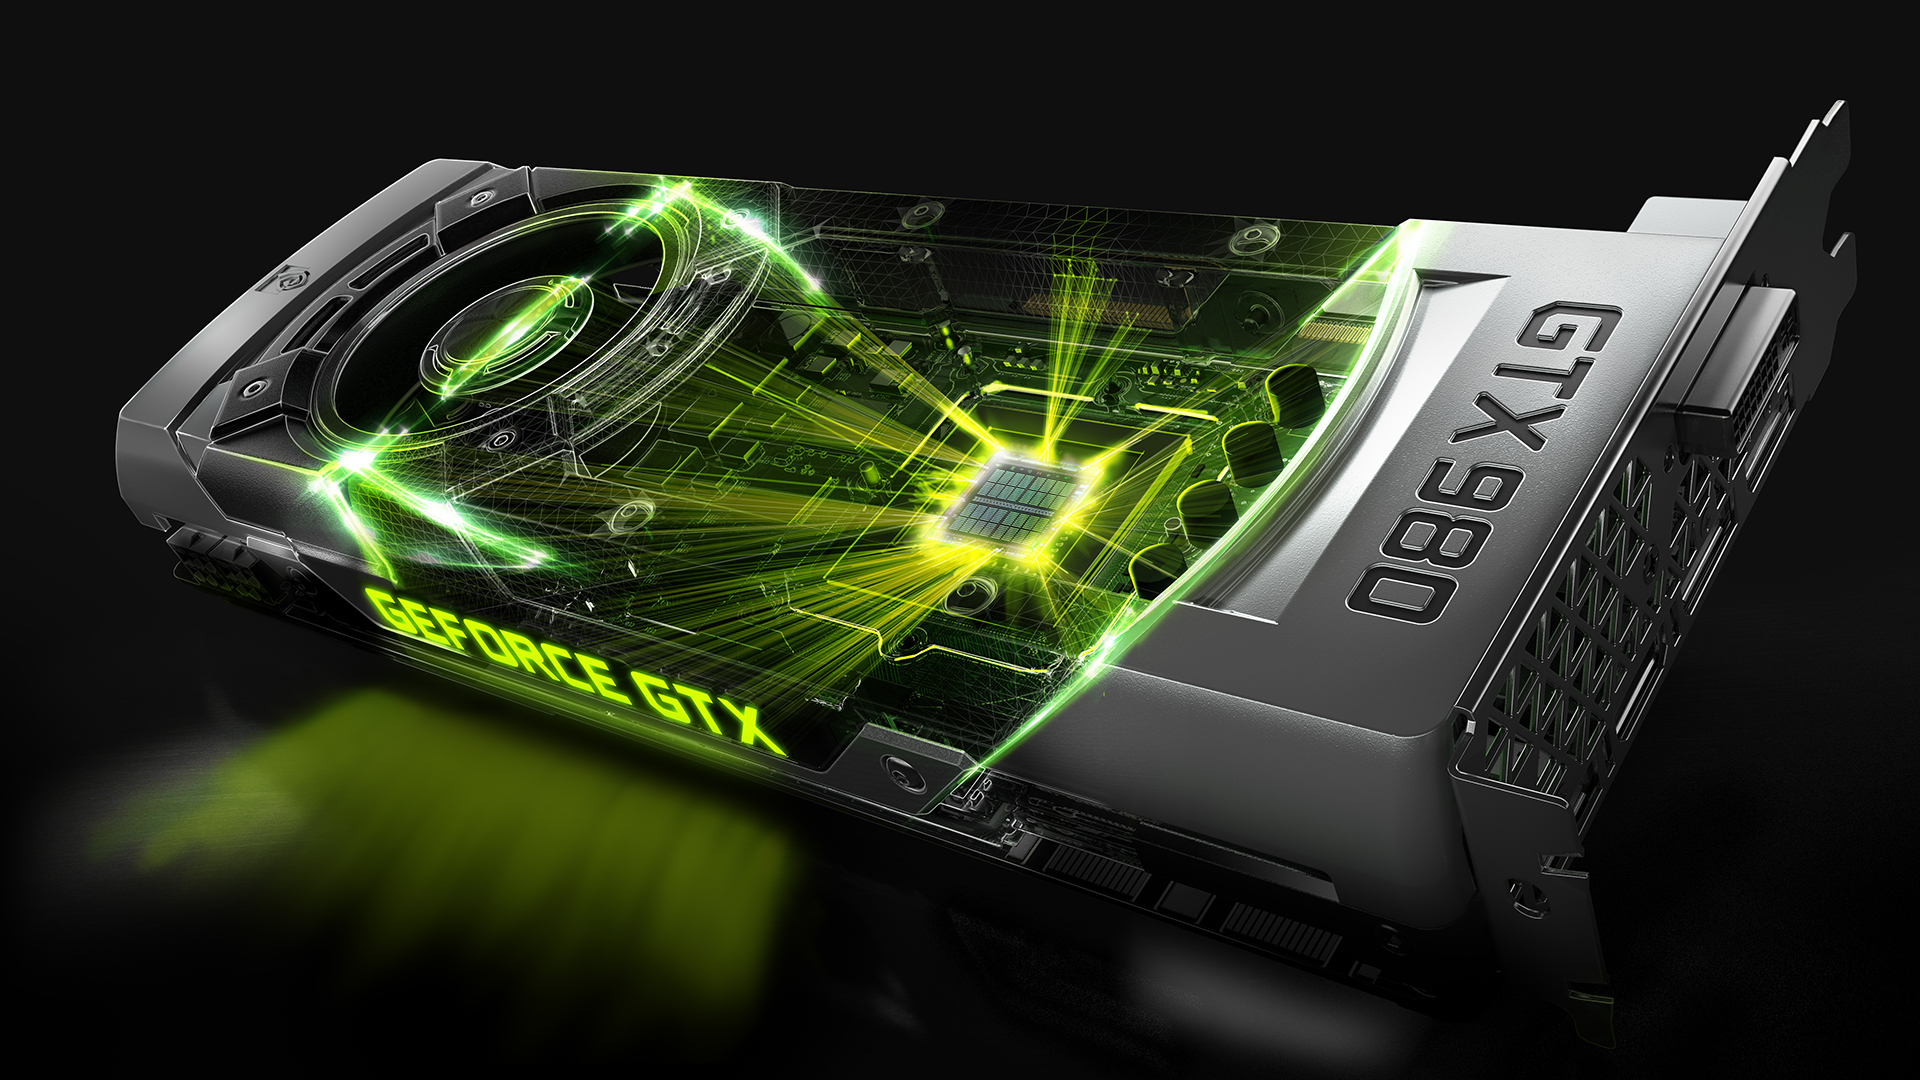 Nvidia's GeForce GTX 980 Ti to carry 